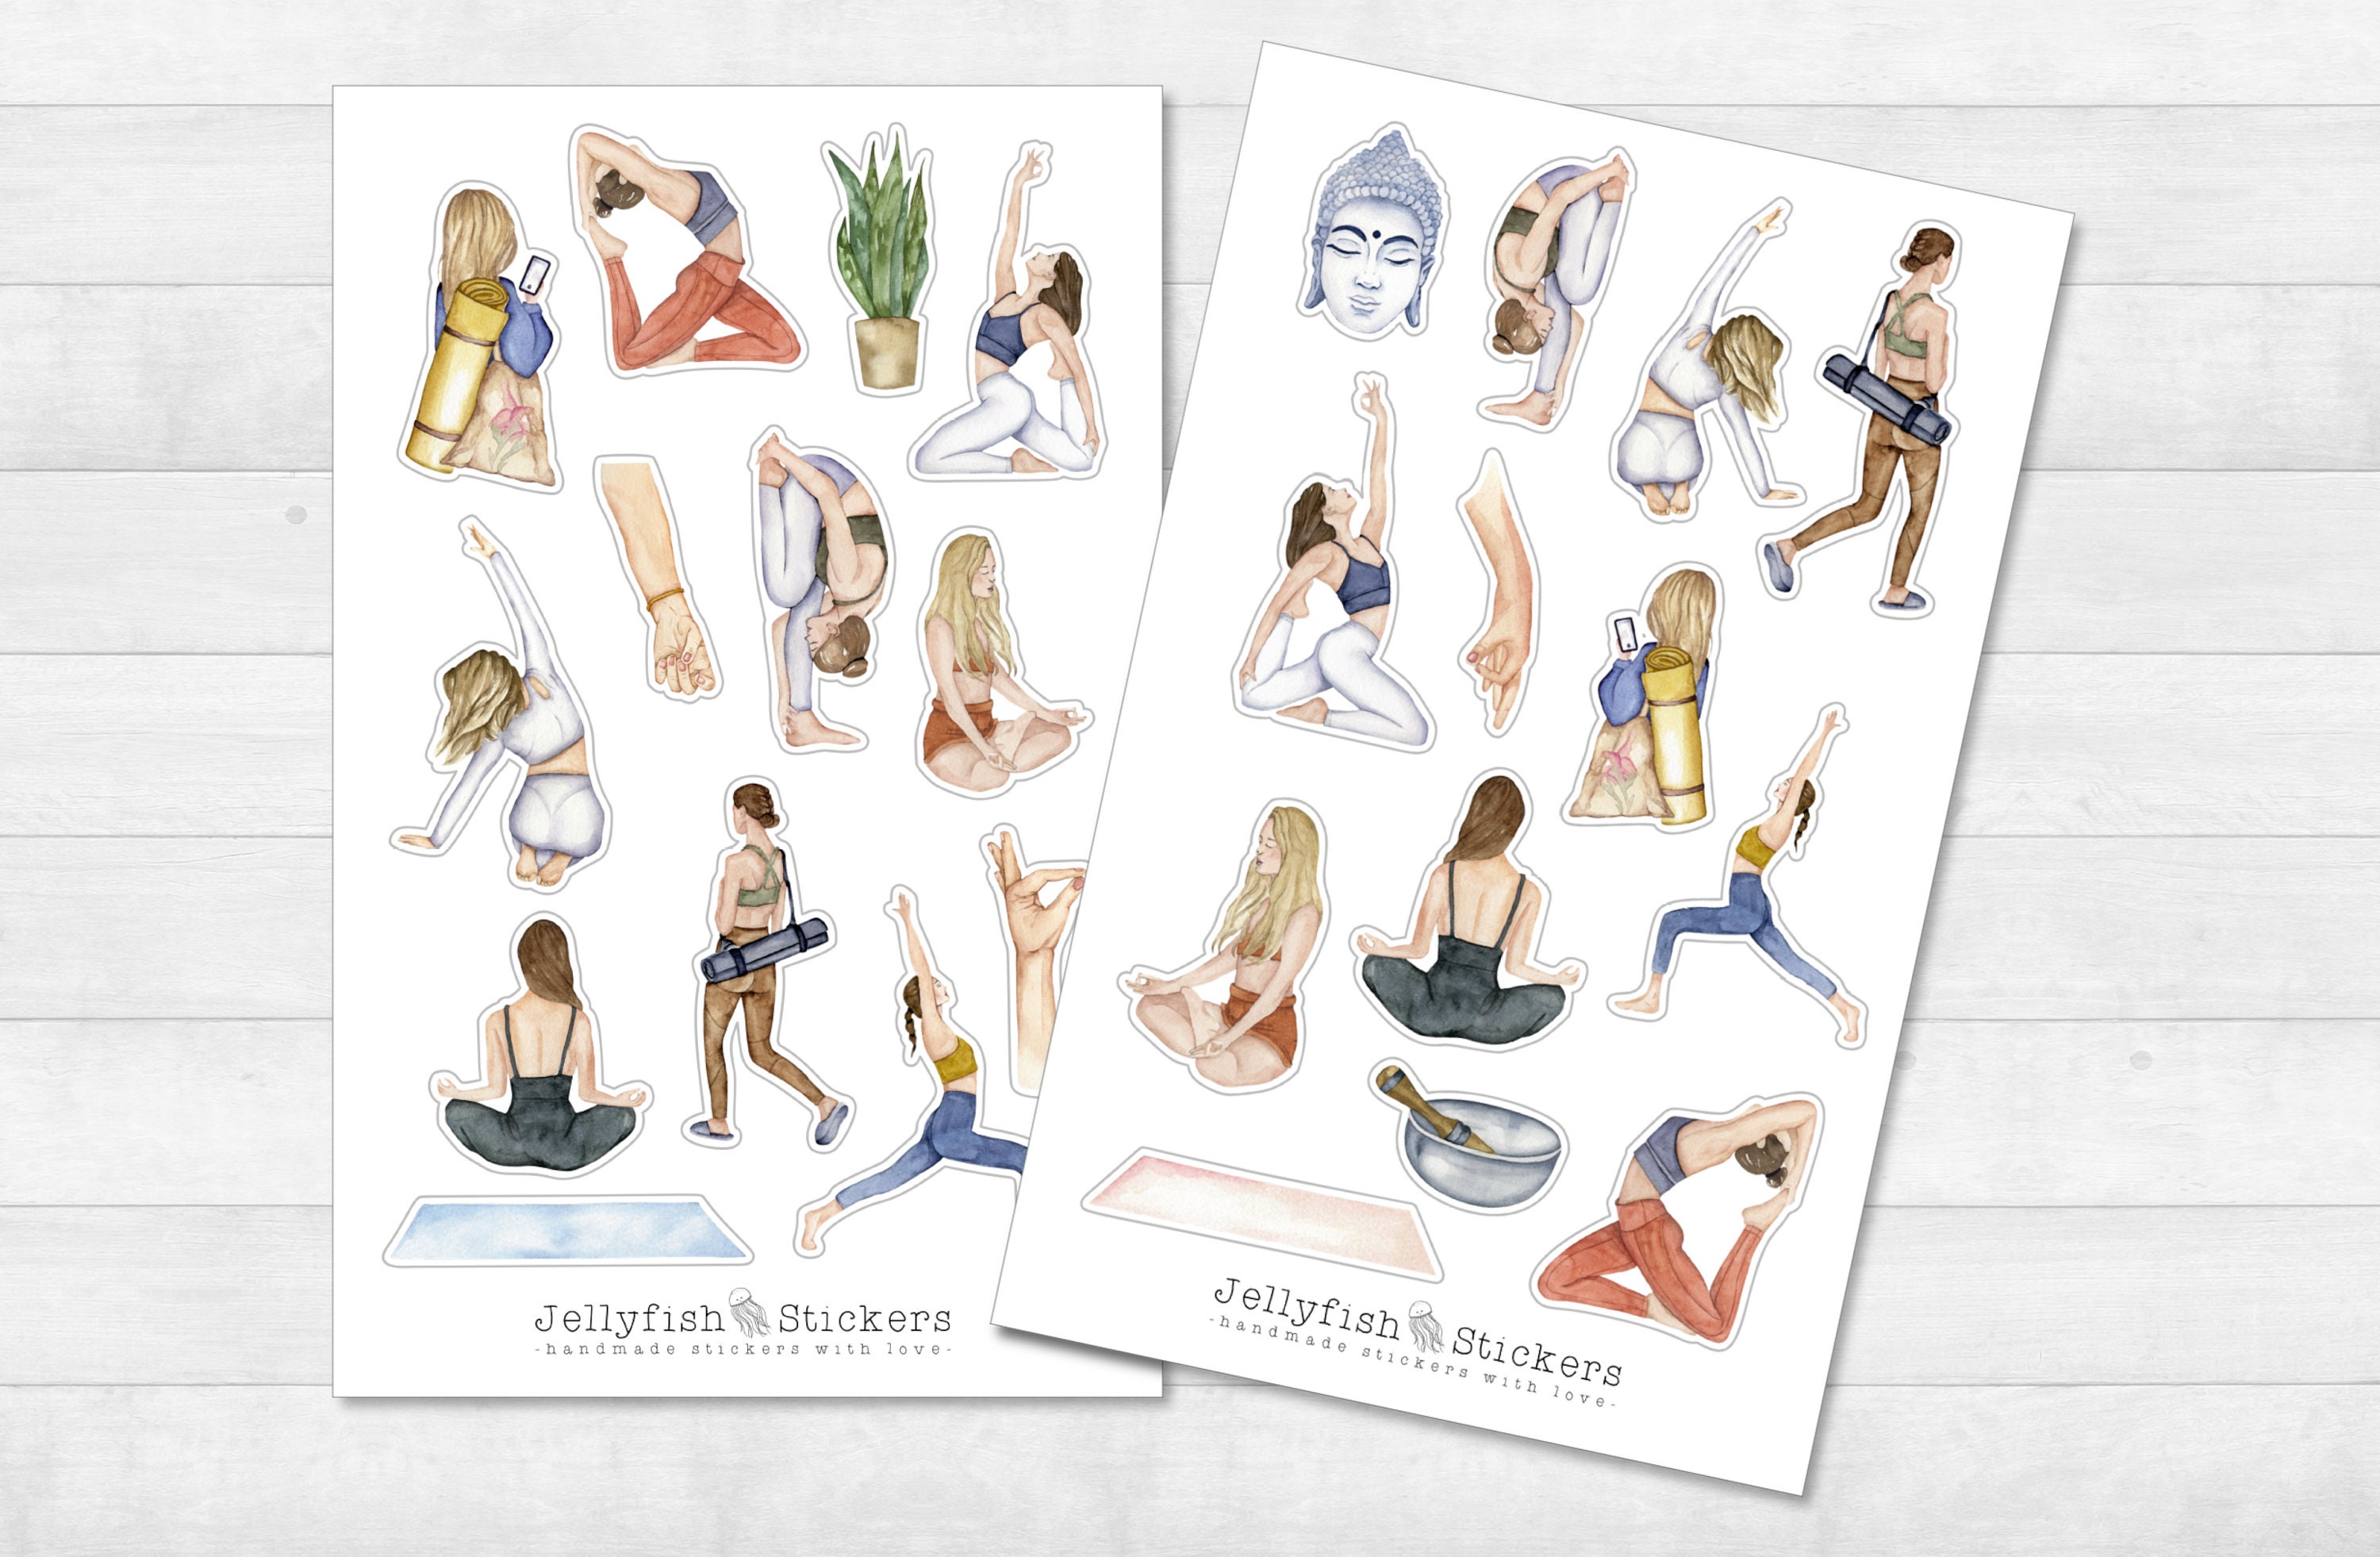 YOGA PEACE LOTUS Printable Planner Stickers Yoga Stickers